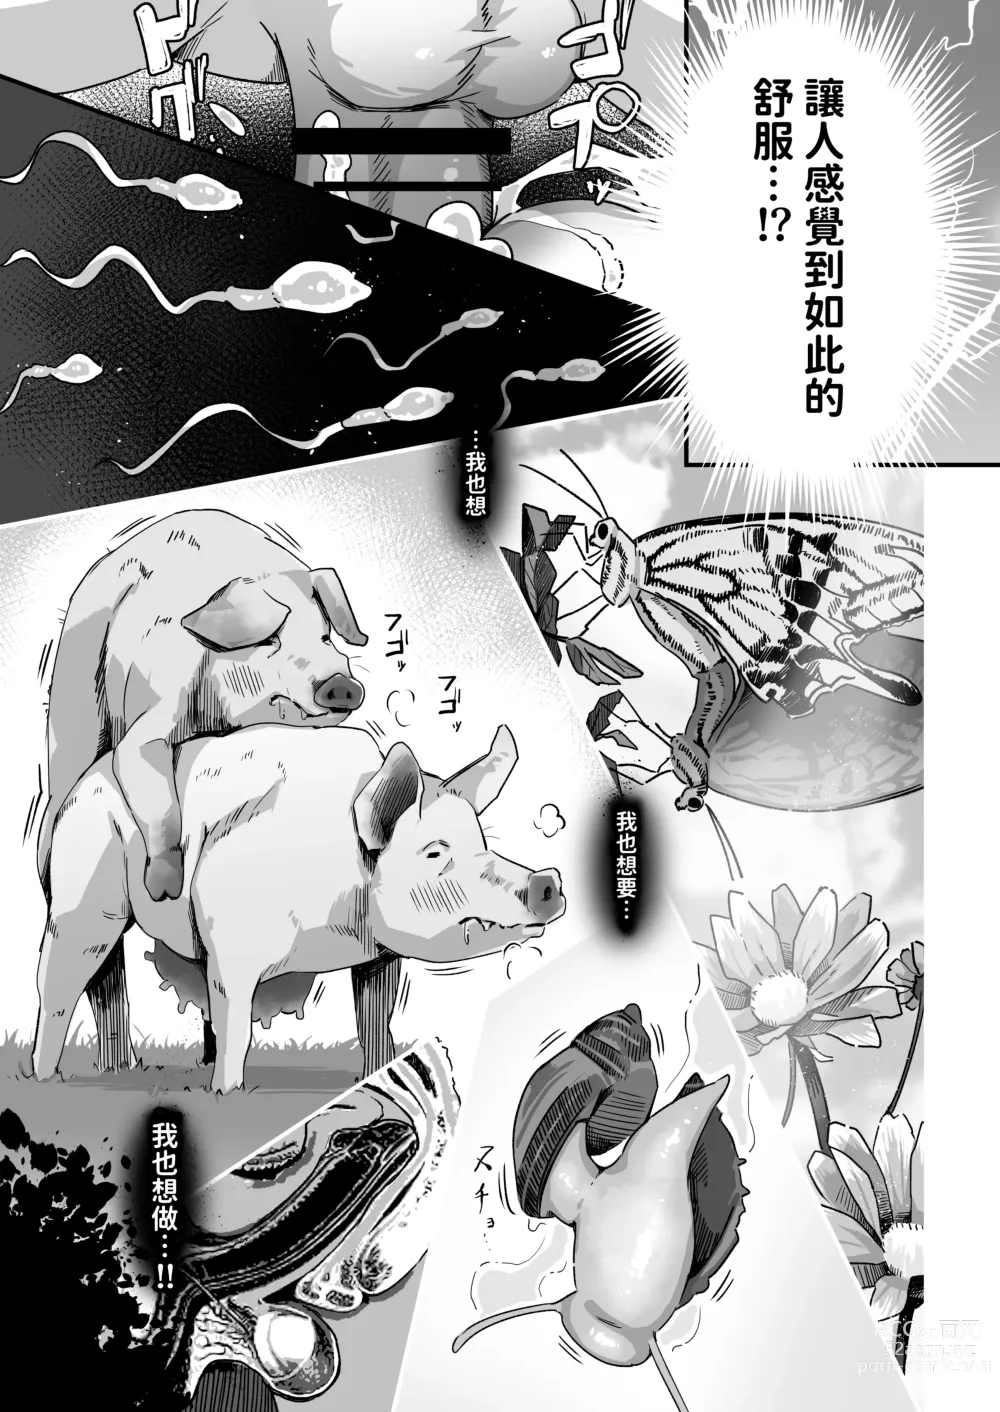 Page 24 of doujinshi Kyou no Jugyou wa, Chikyuujin no Hanshoku Katsudou no Kansatsu desu. - Todays lesson is observation of the breeding activities of earthlings.